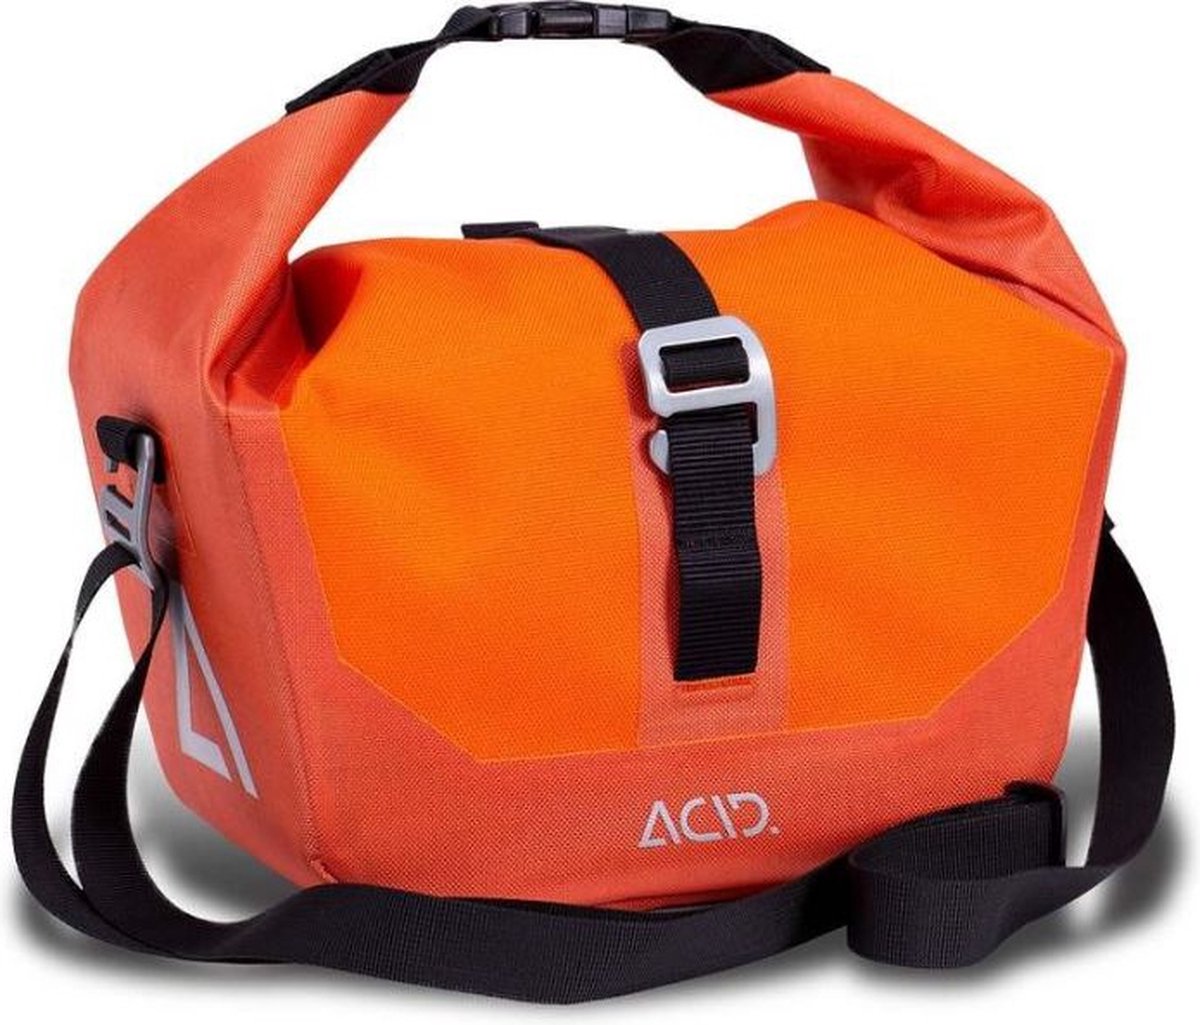 ACID Stuurkoffer TRAVLR voorkant - Waterbestendig - Reflecterende elementen - Inh. 6L - Polyester - Oranje/Zwart